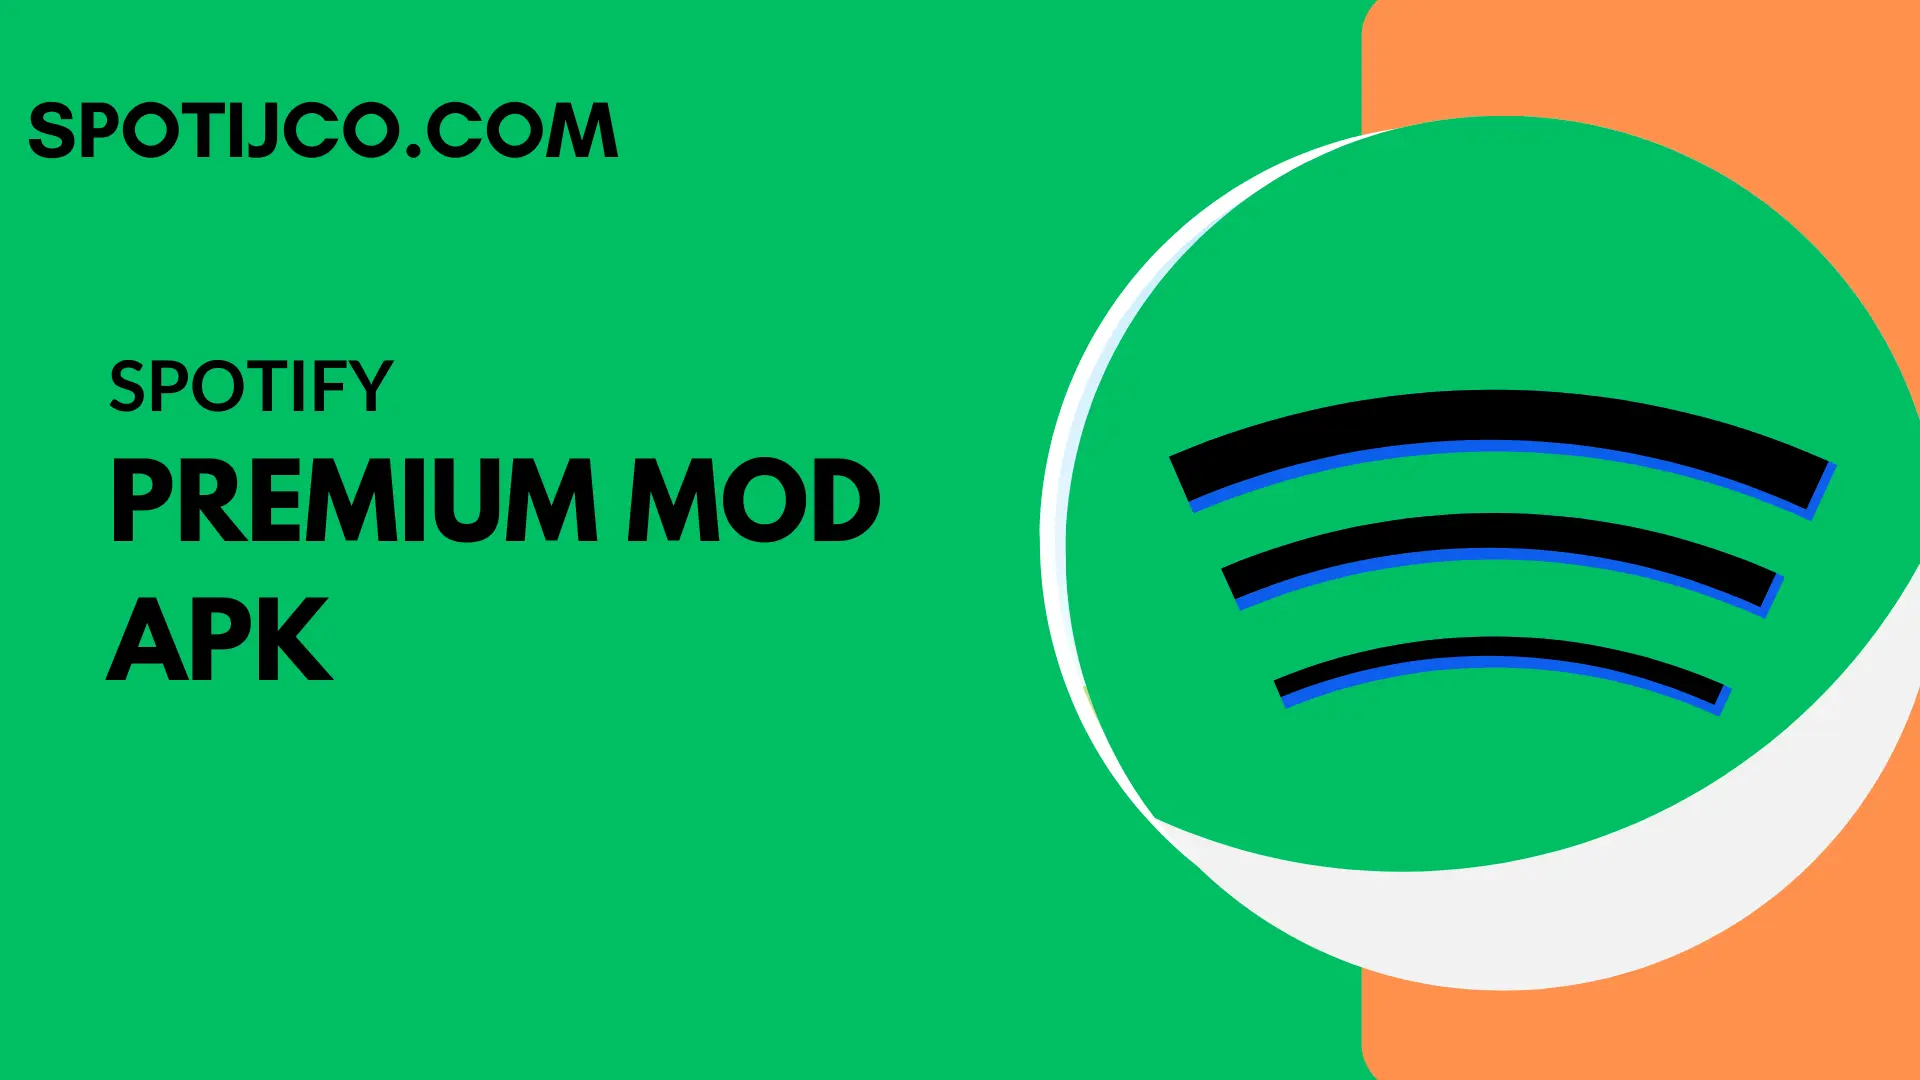 Spotify remium Mod APK